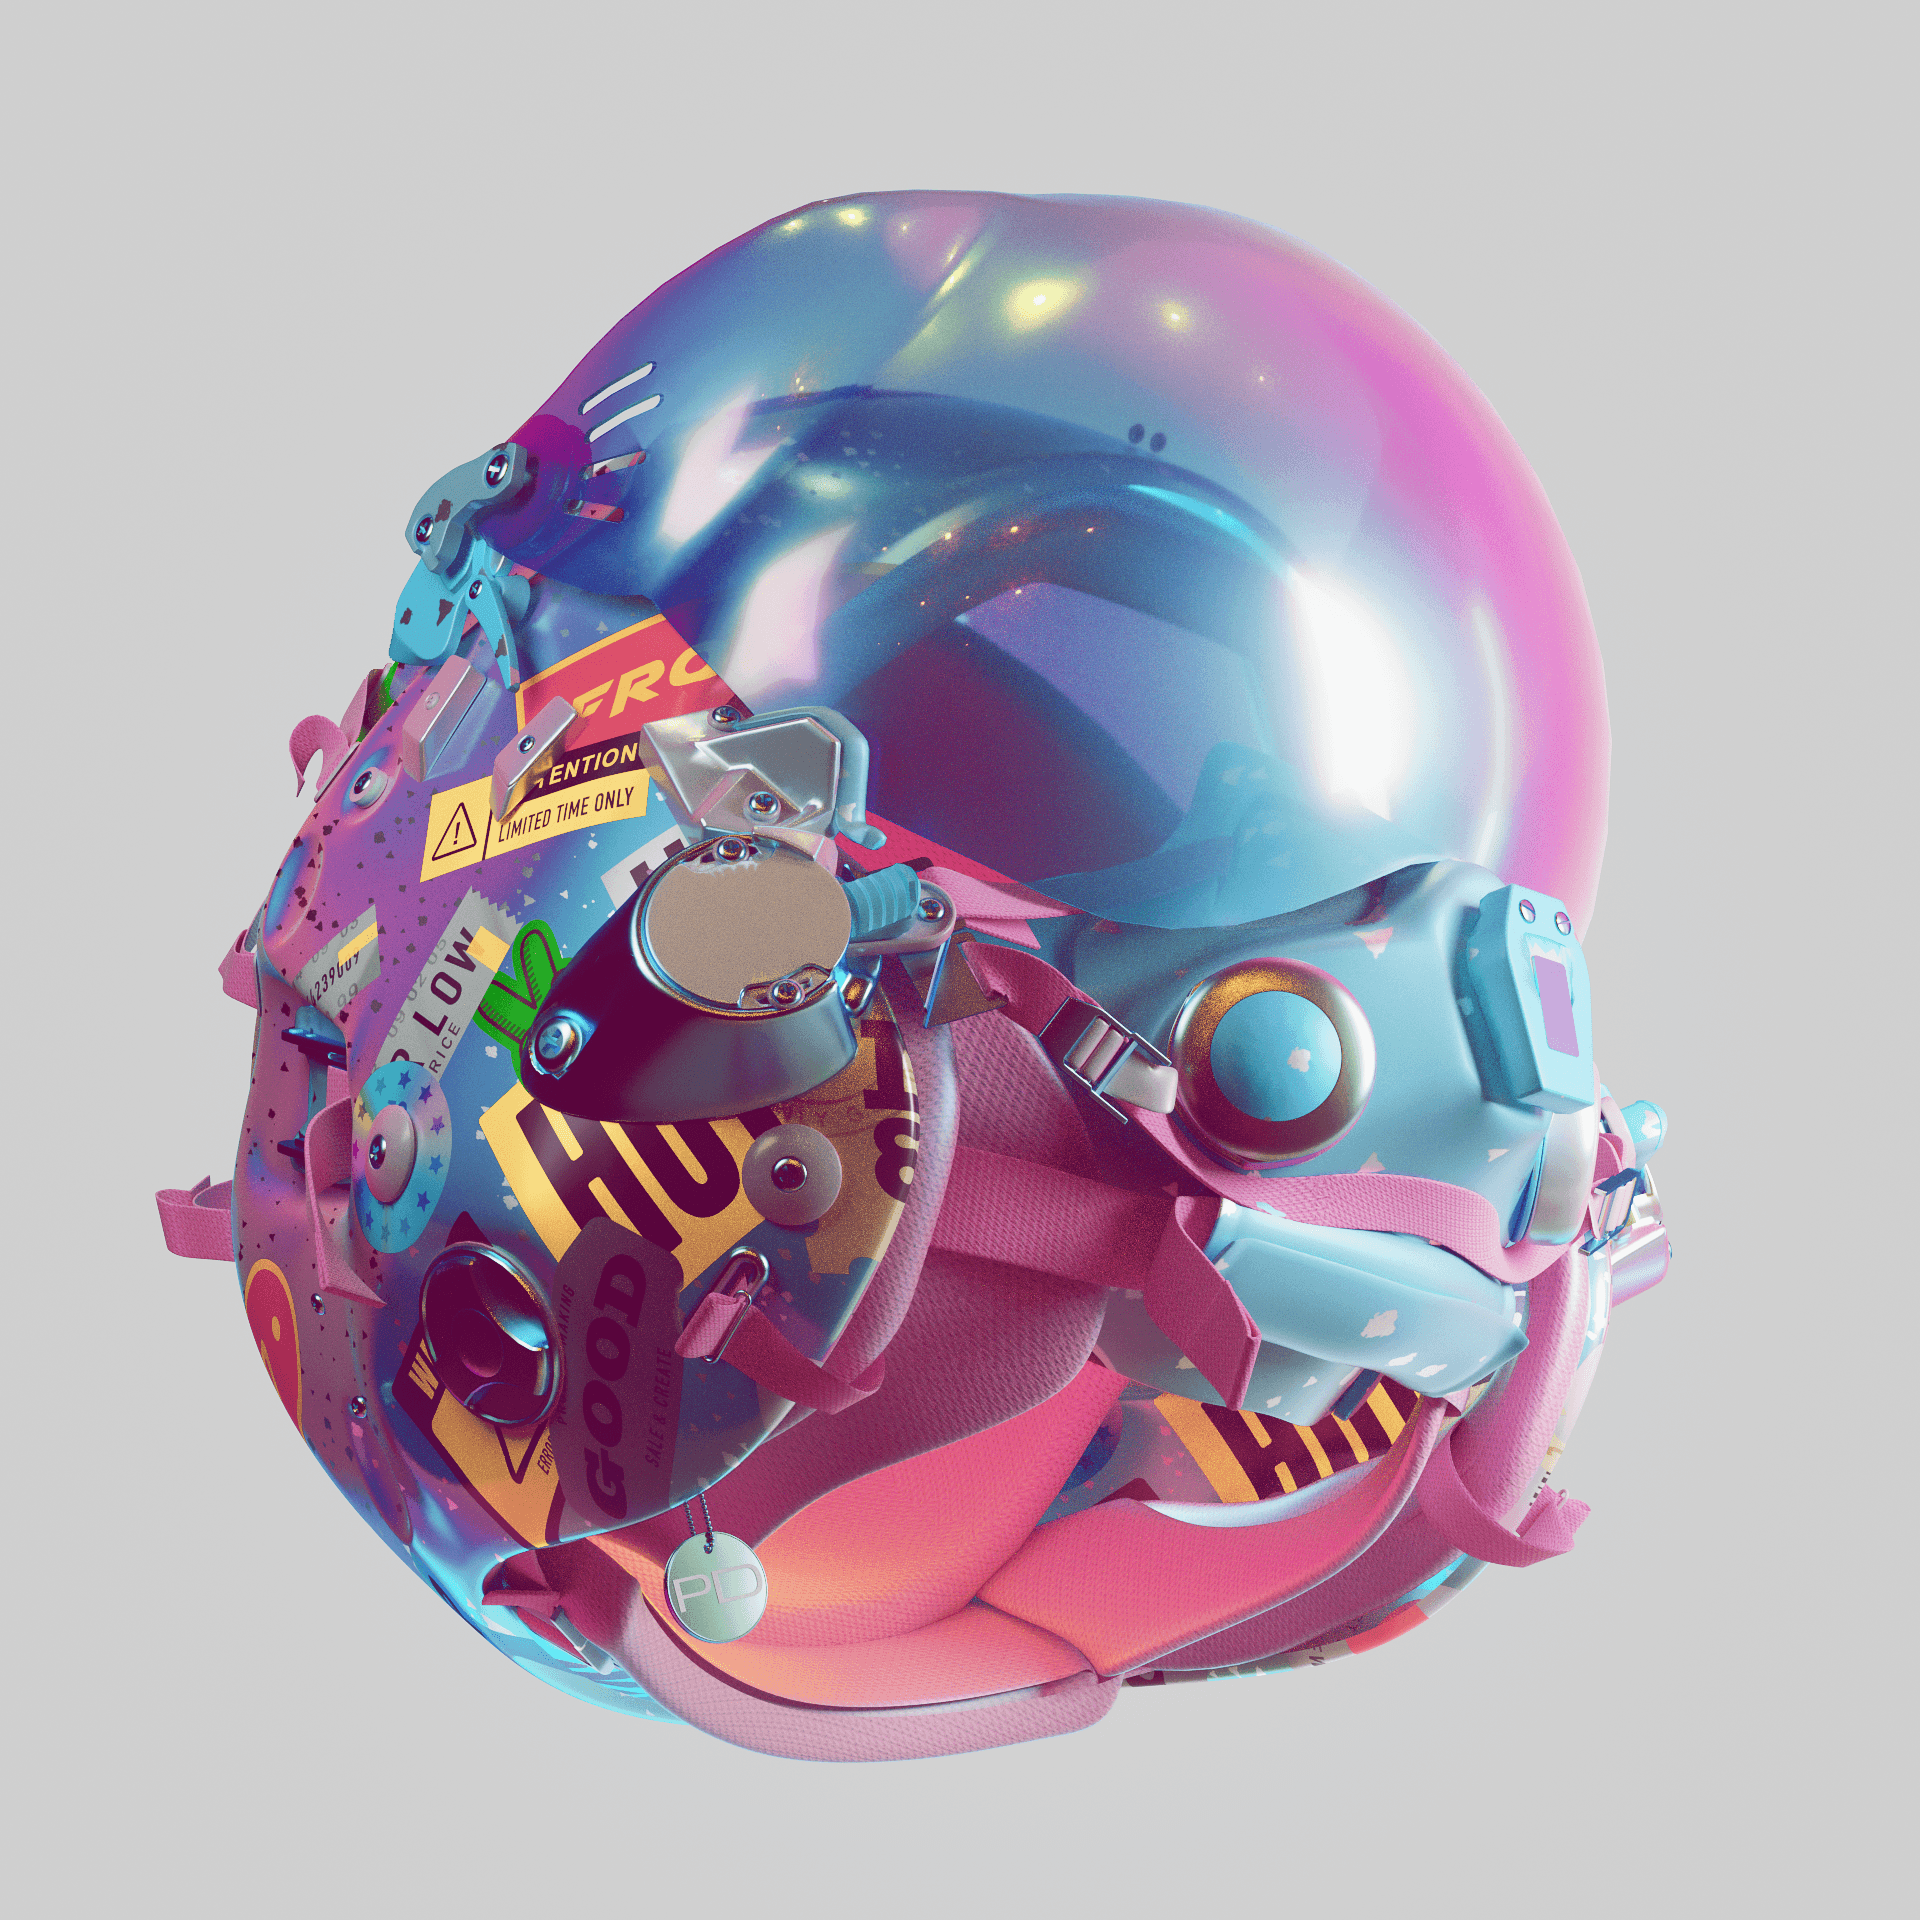 PD Helmet by Peter Tarka